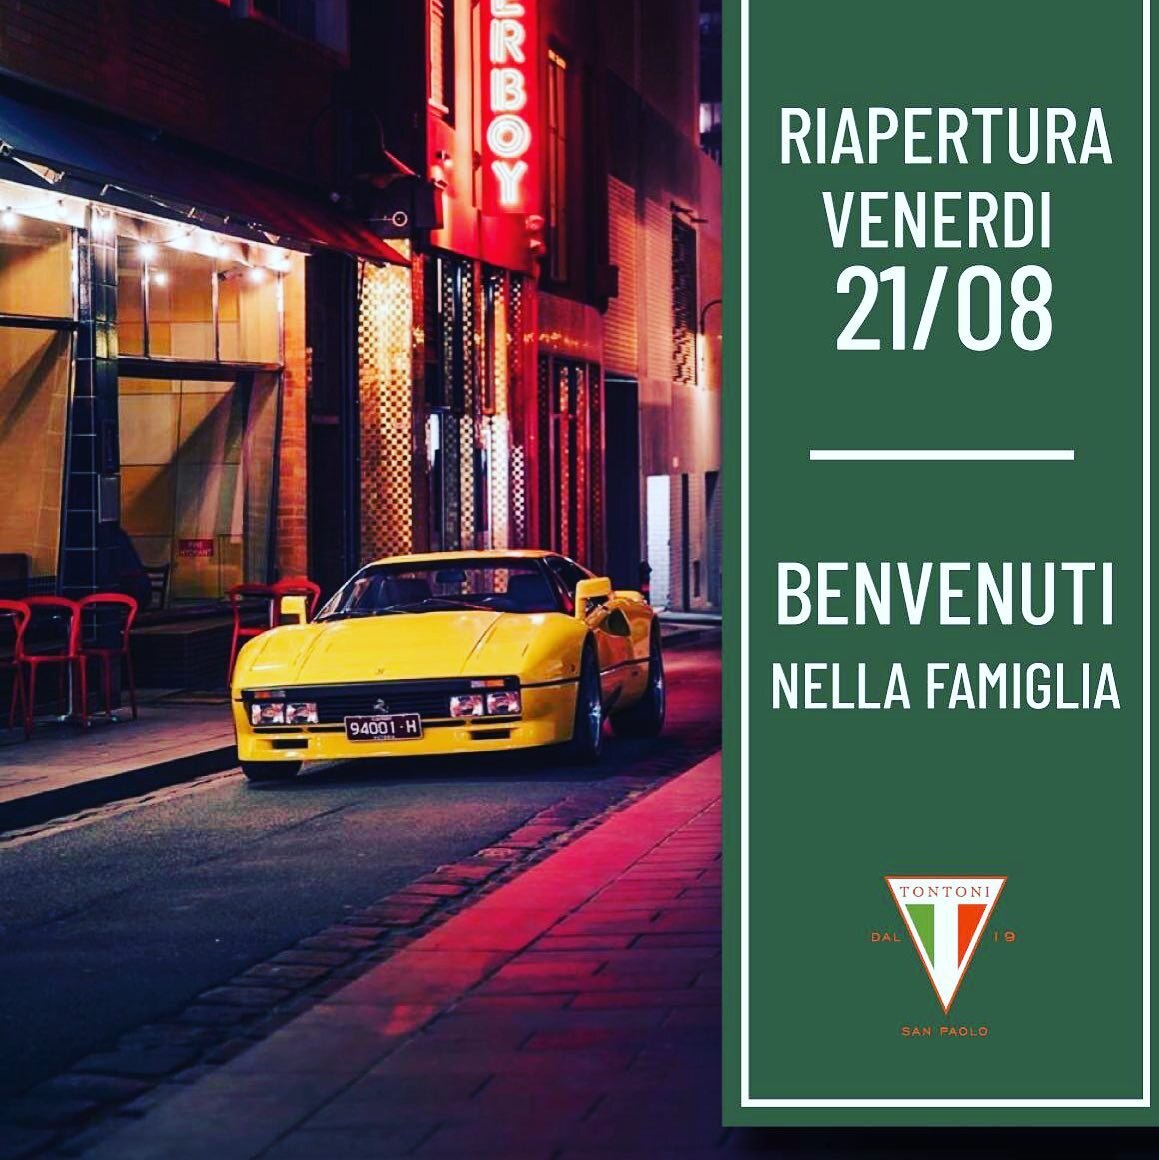 Venerdi!!! Esta sexta voltamos com novo menu #tontoni #sp #it #trattoriamoderna #tontonitrattoria